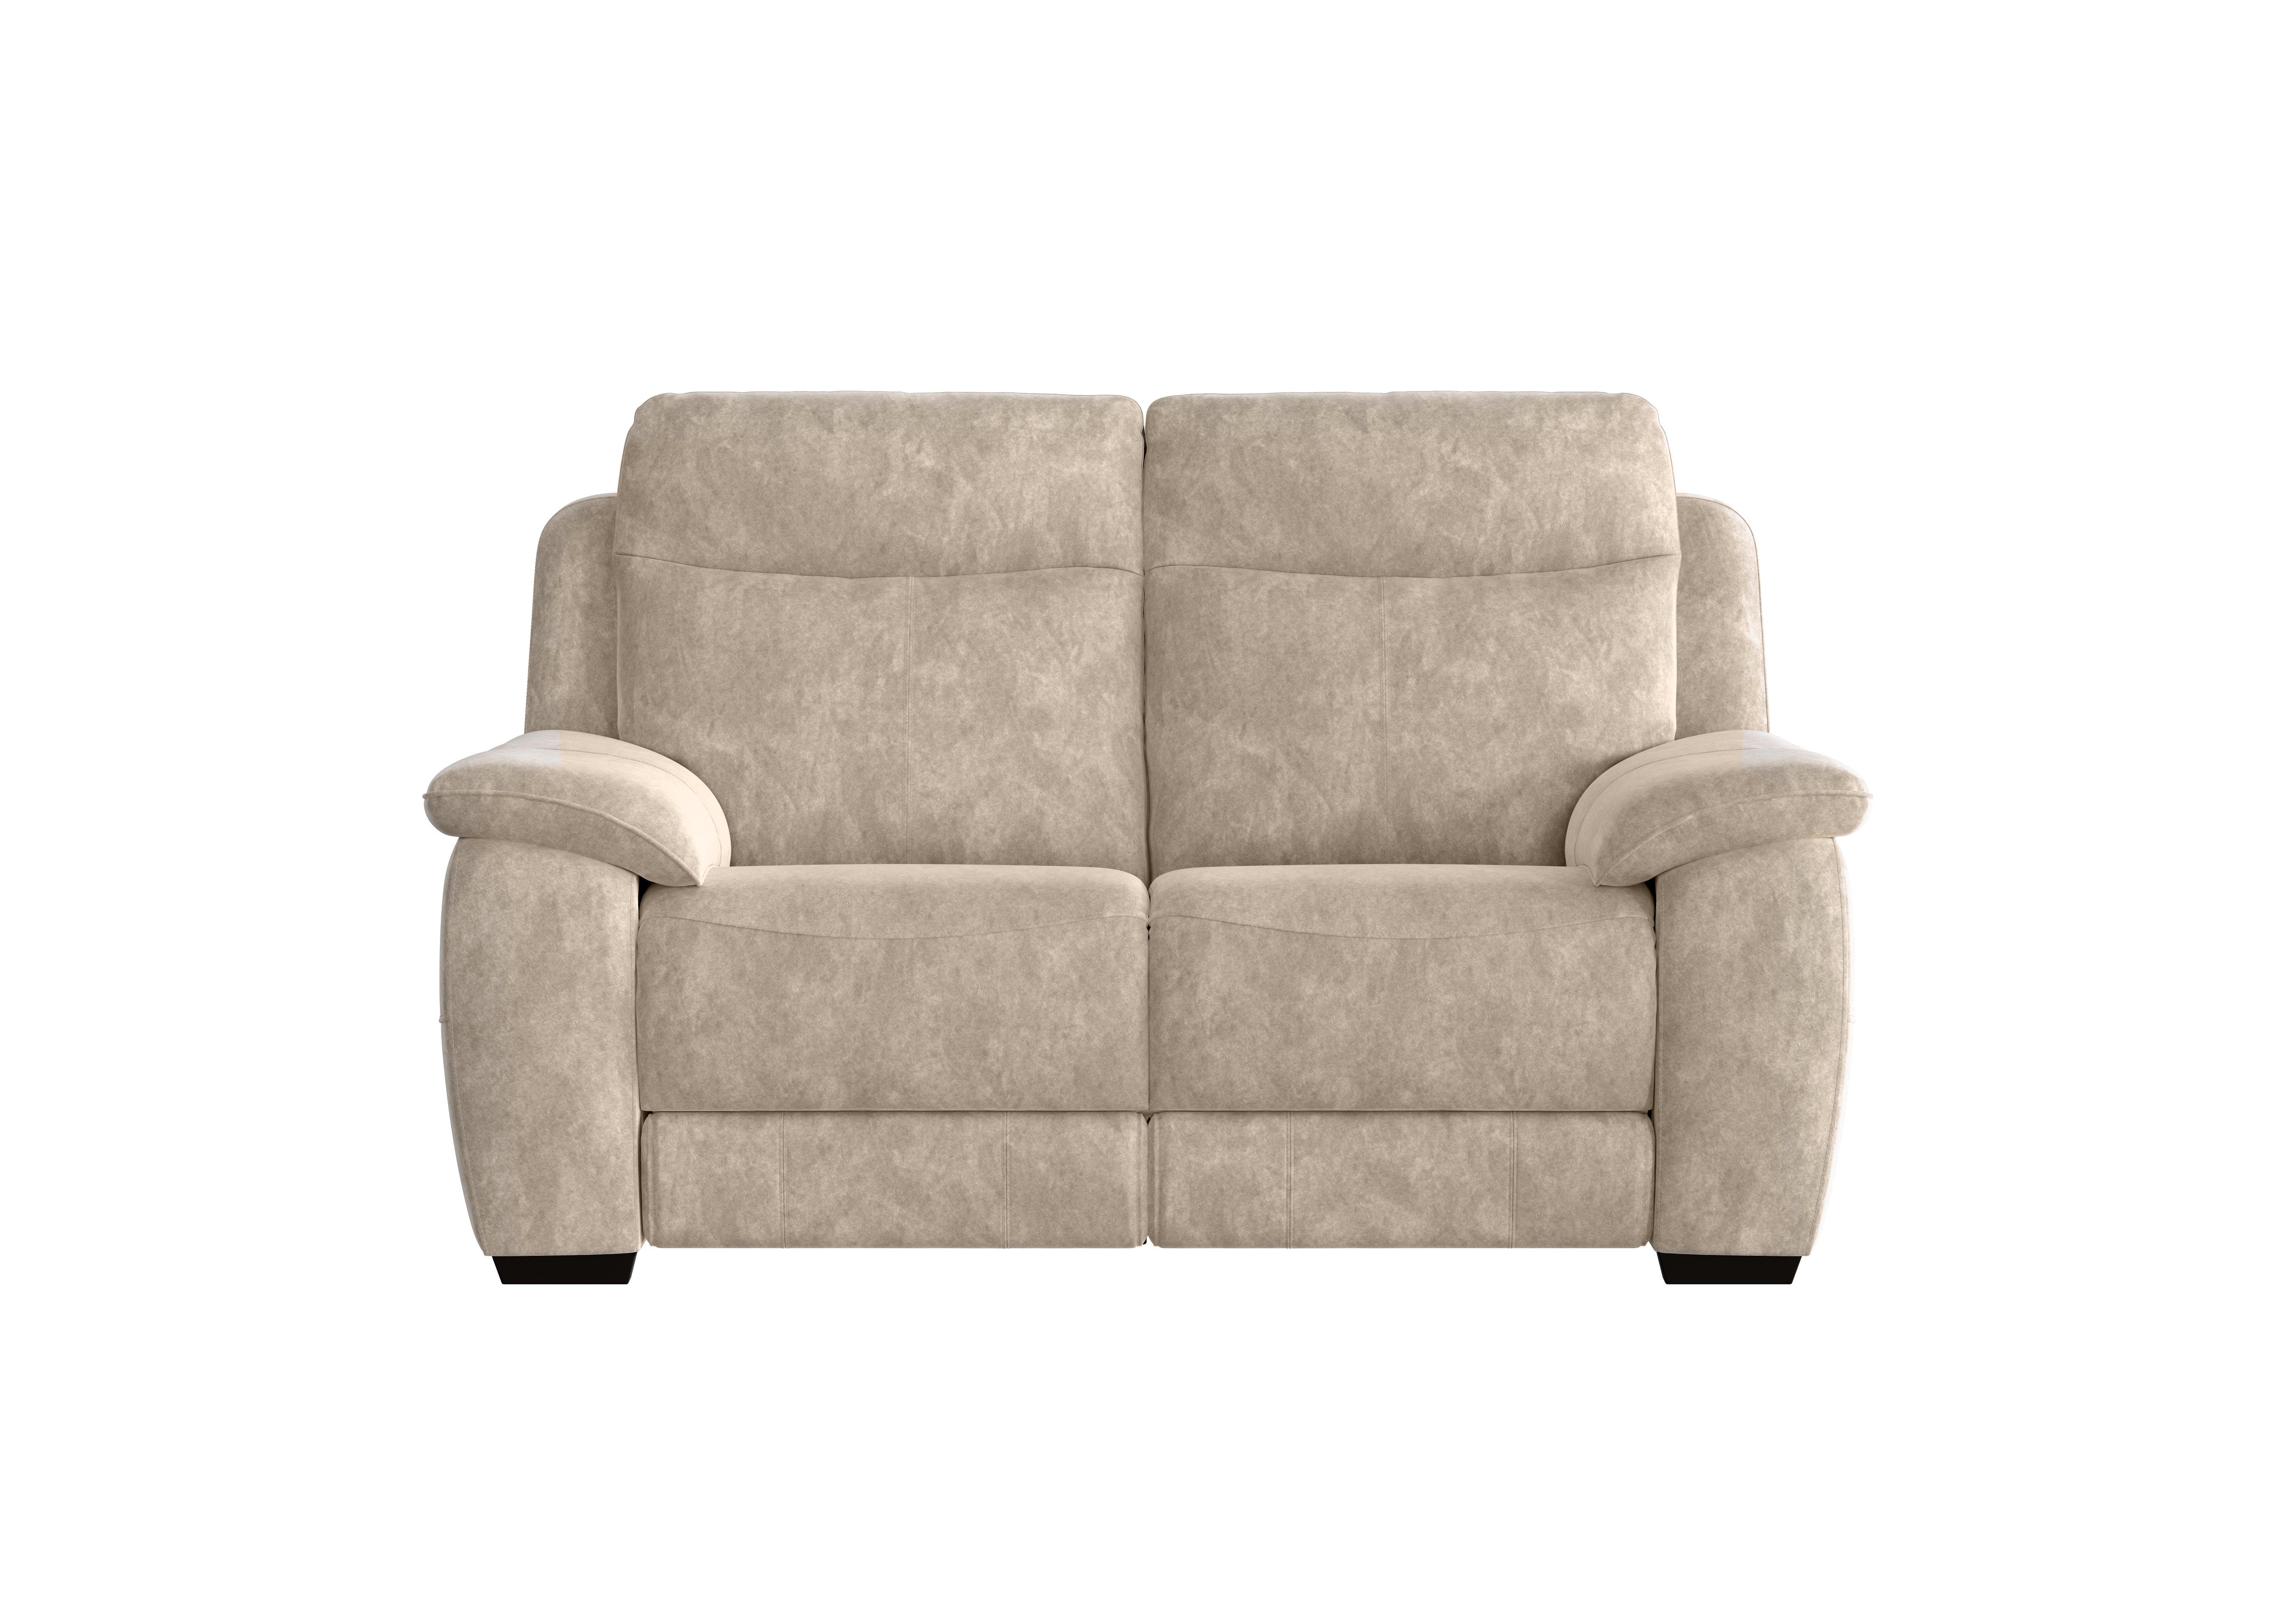 Starlight Express 2 Seater Fabric Recliner Sofa with Power Headrests in Bfa-Bnn-R26 Fv2 Cream on Furniture Village